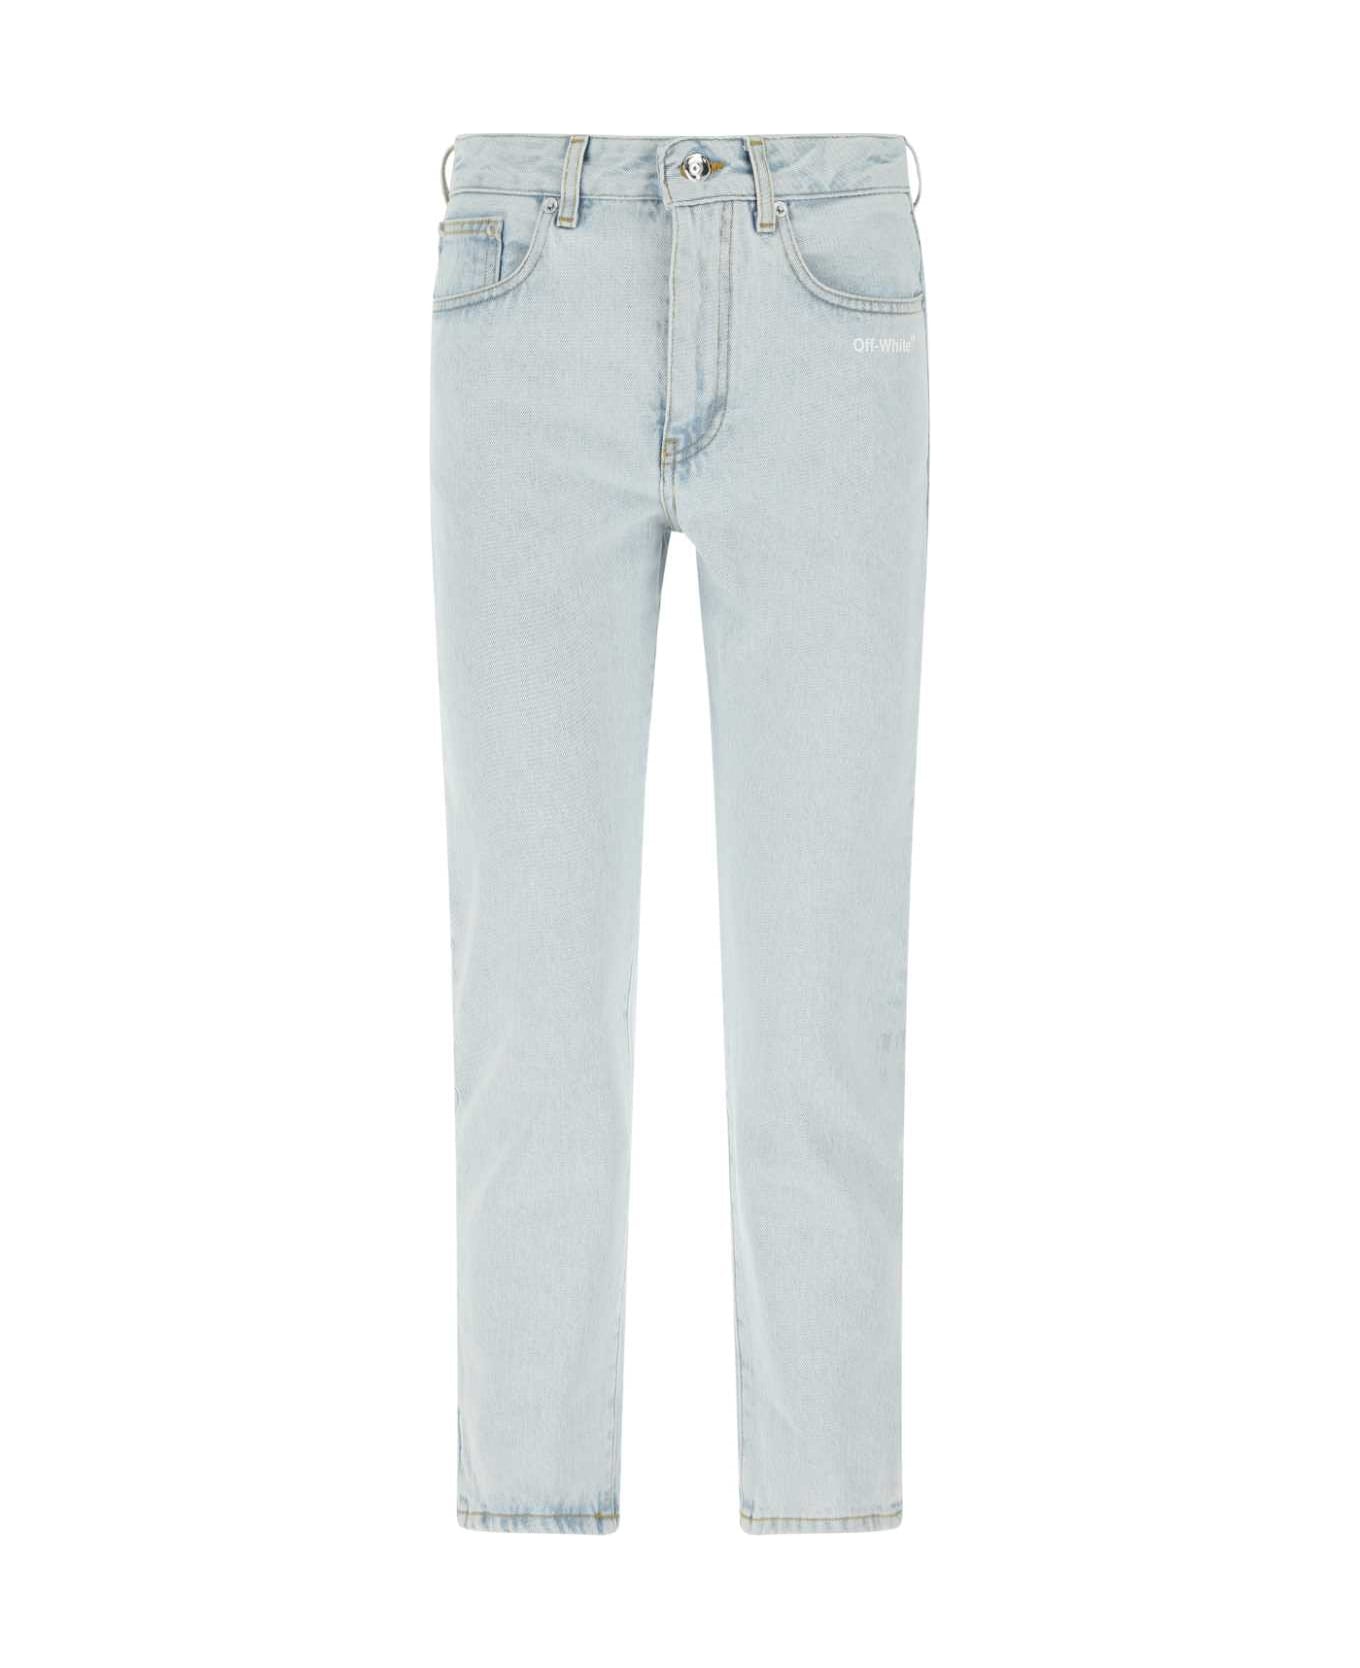 Off-White Denim Jeans - 4001